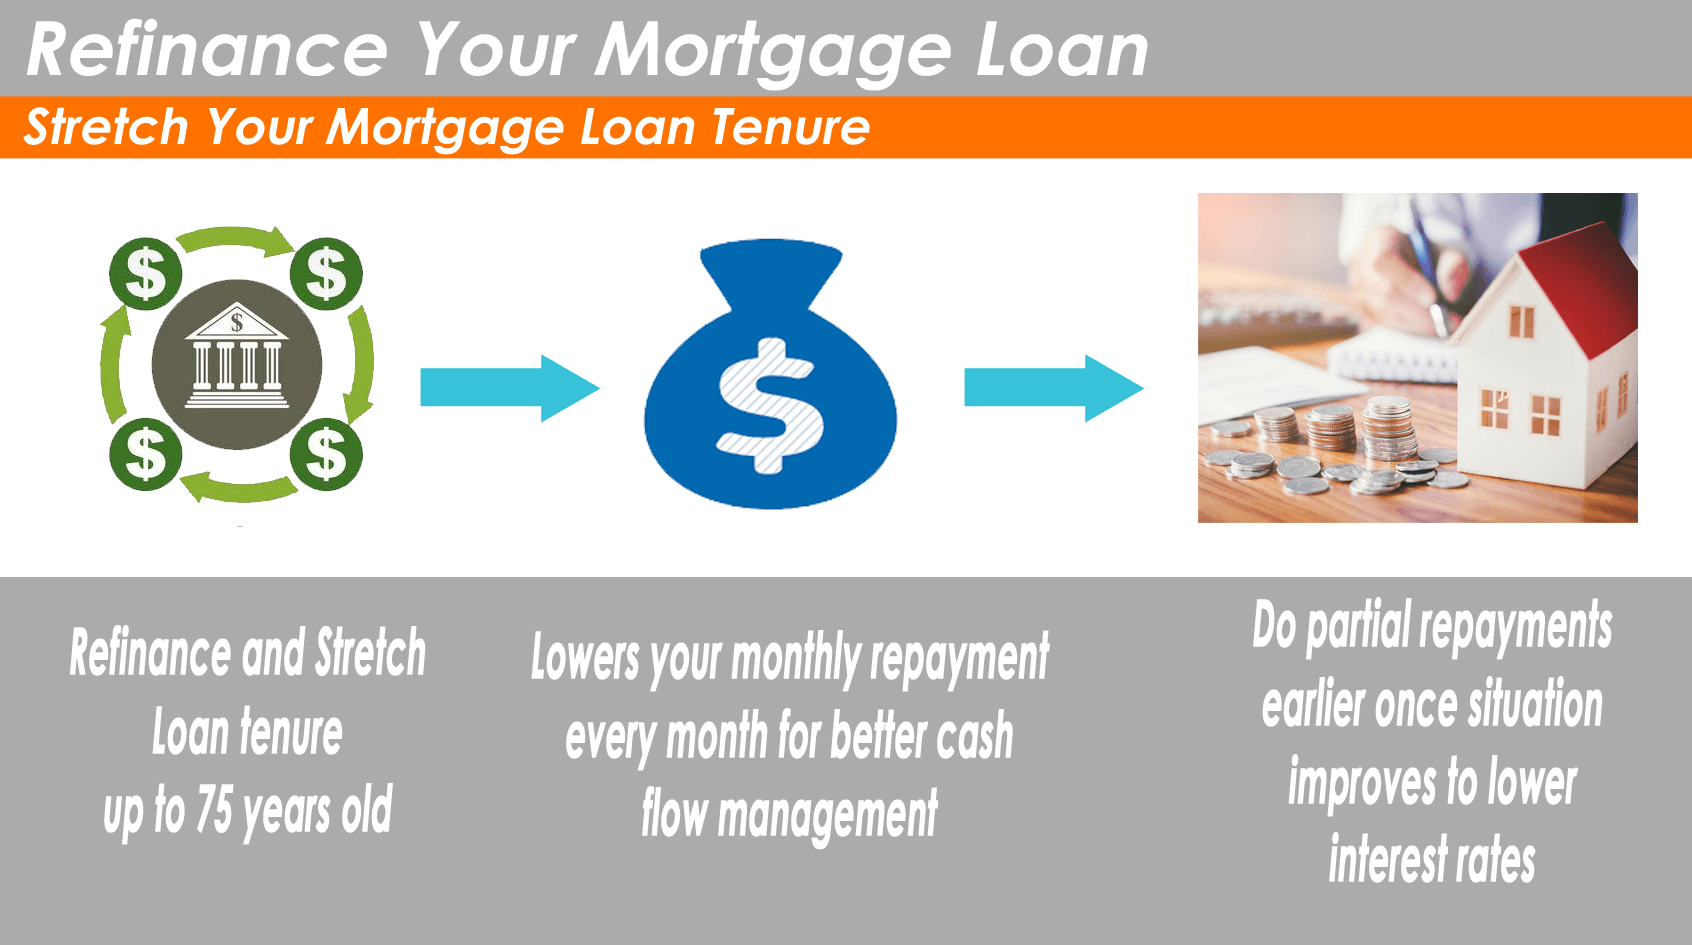 Refinance and stretch Mortgage Loan Tenure